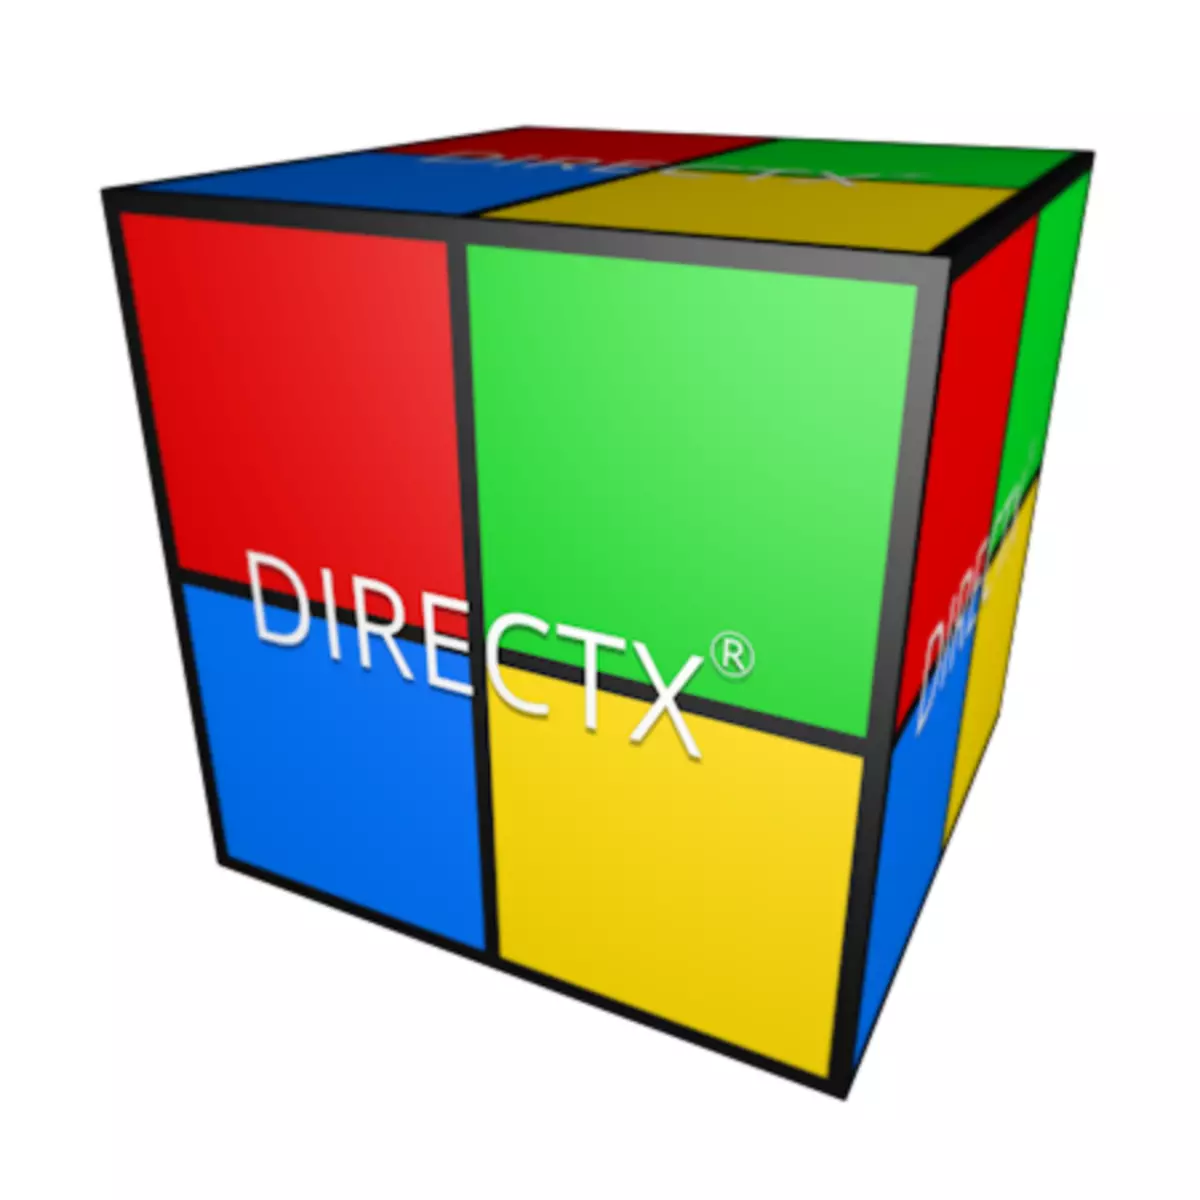 Apa DirectX lebih baik untuk Windows 7